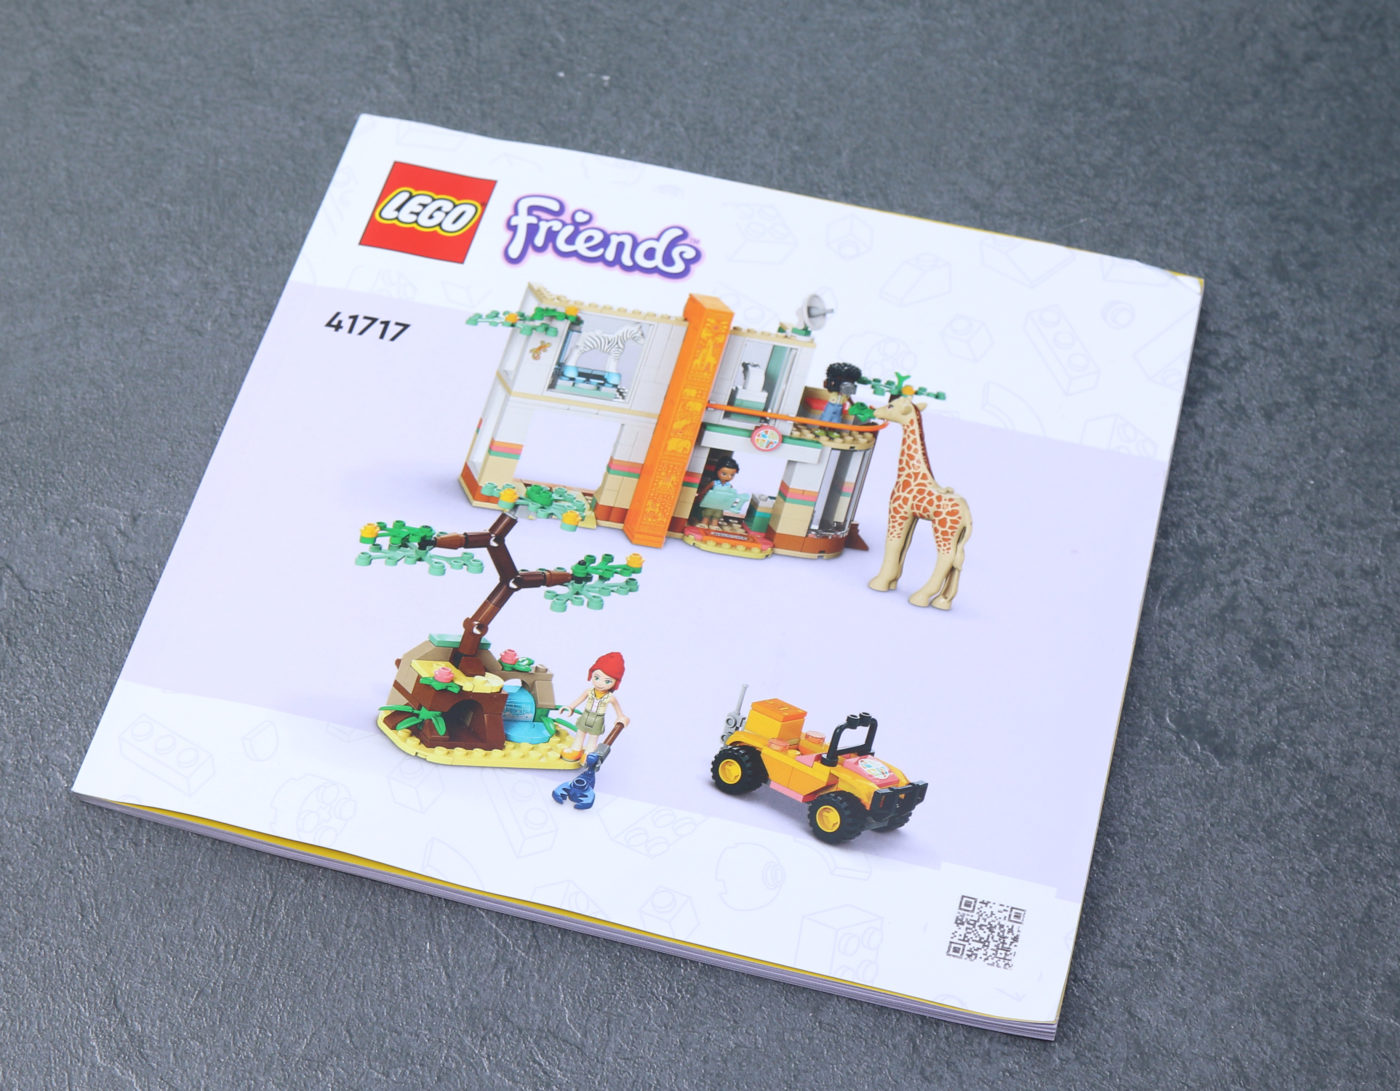 Review: LEGO 41717 Mia's Wildlife Rescue - Jay's Brick Blog